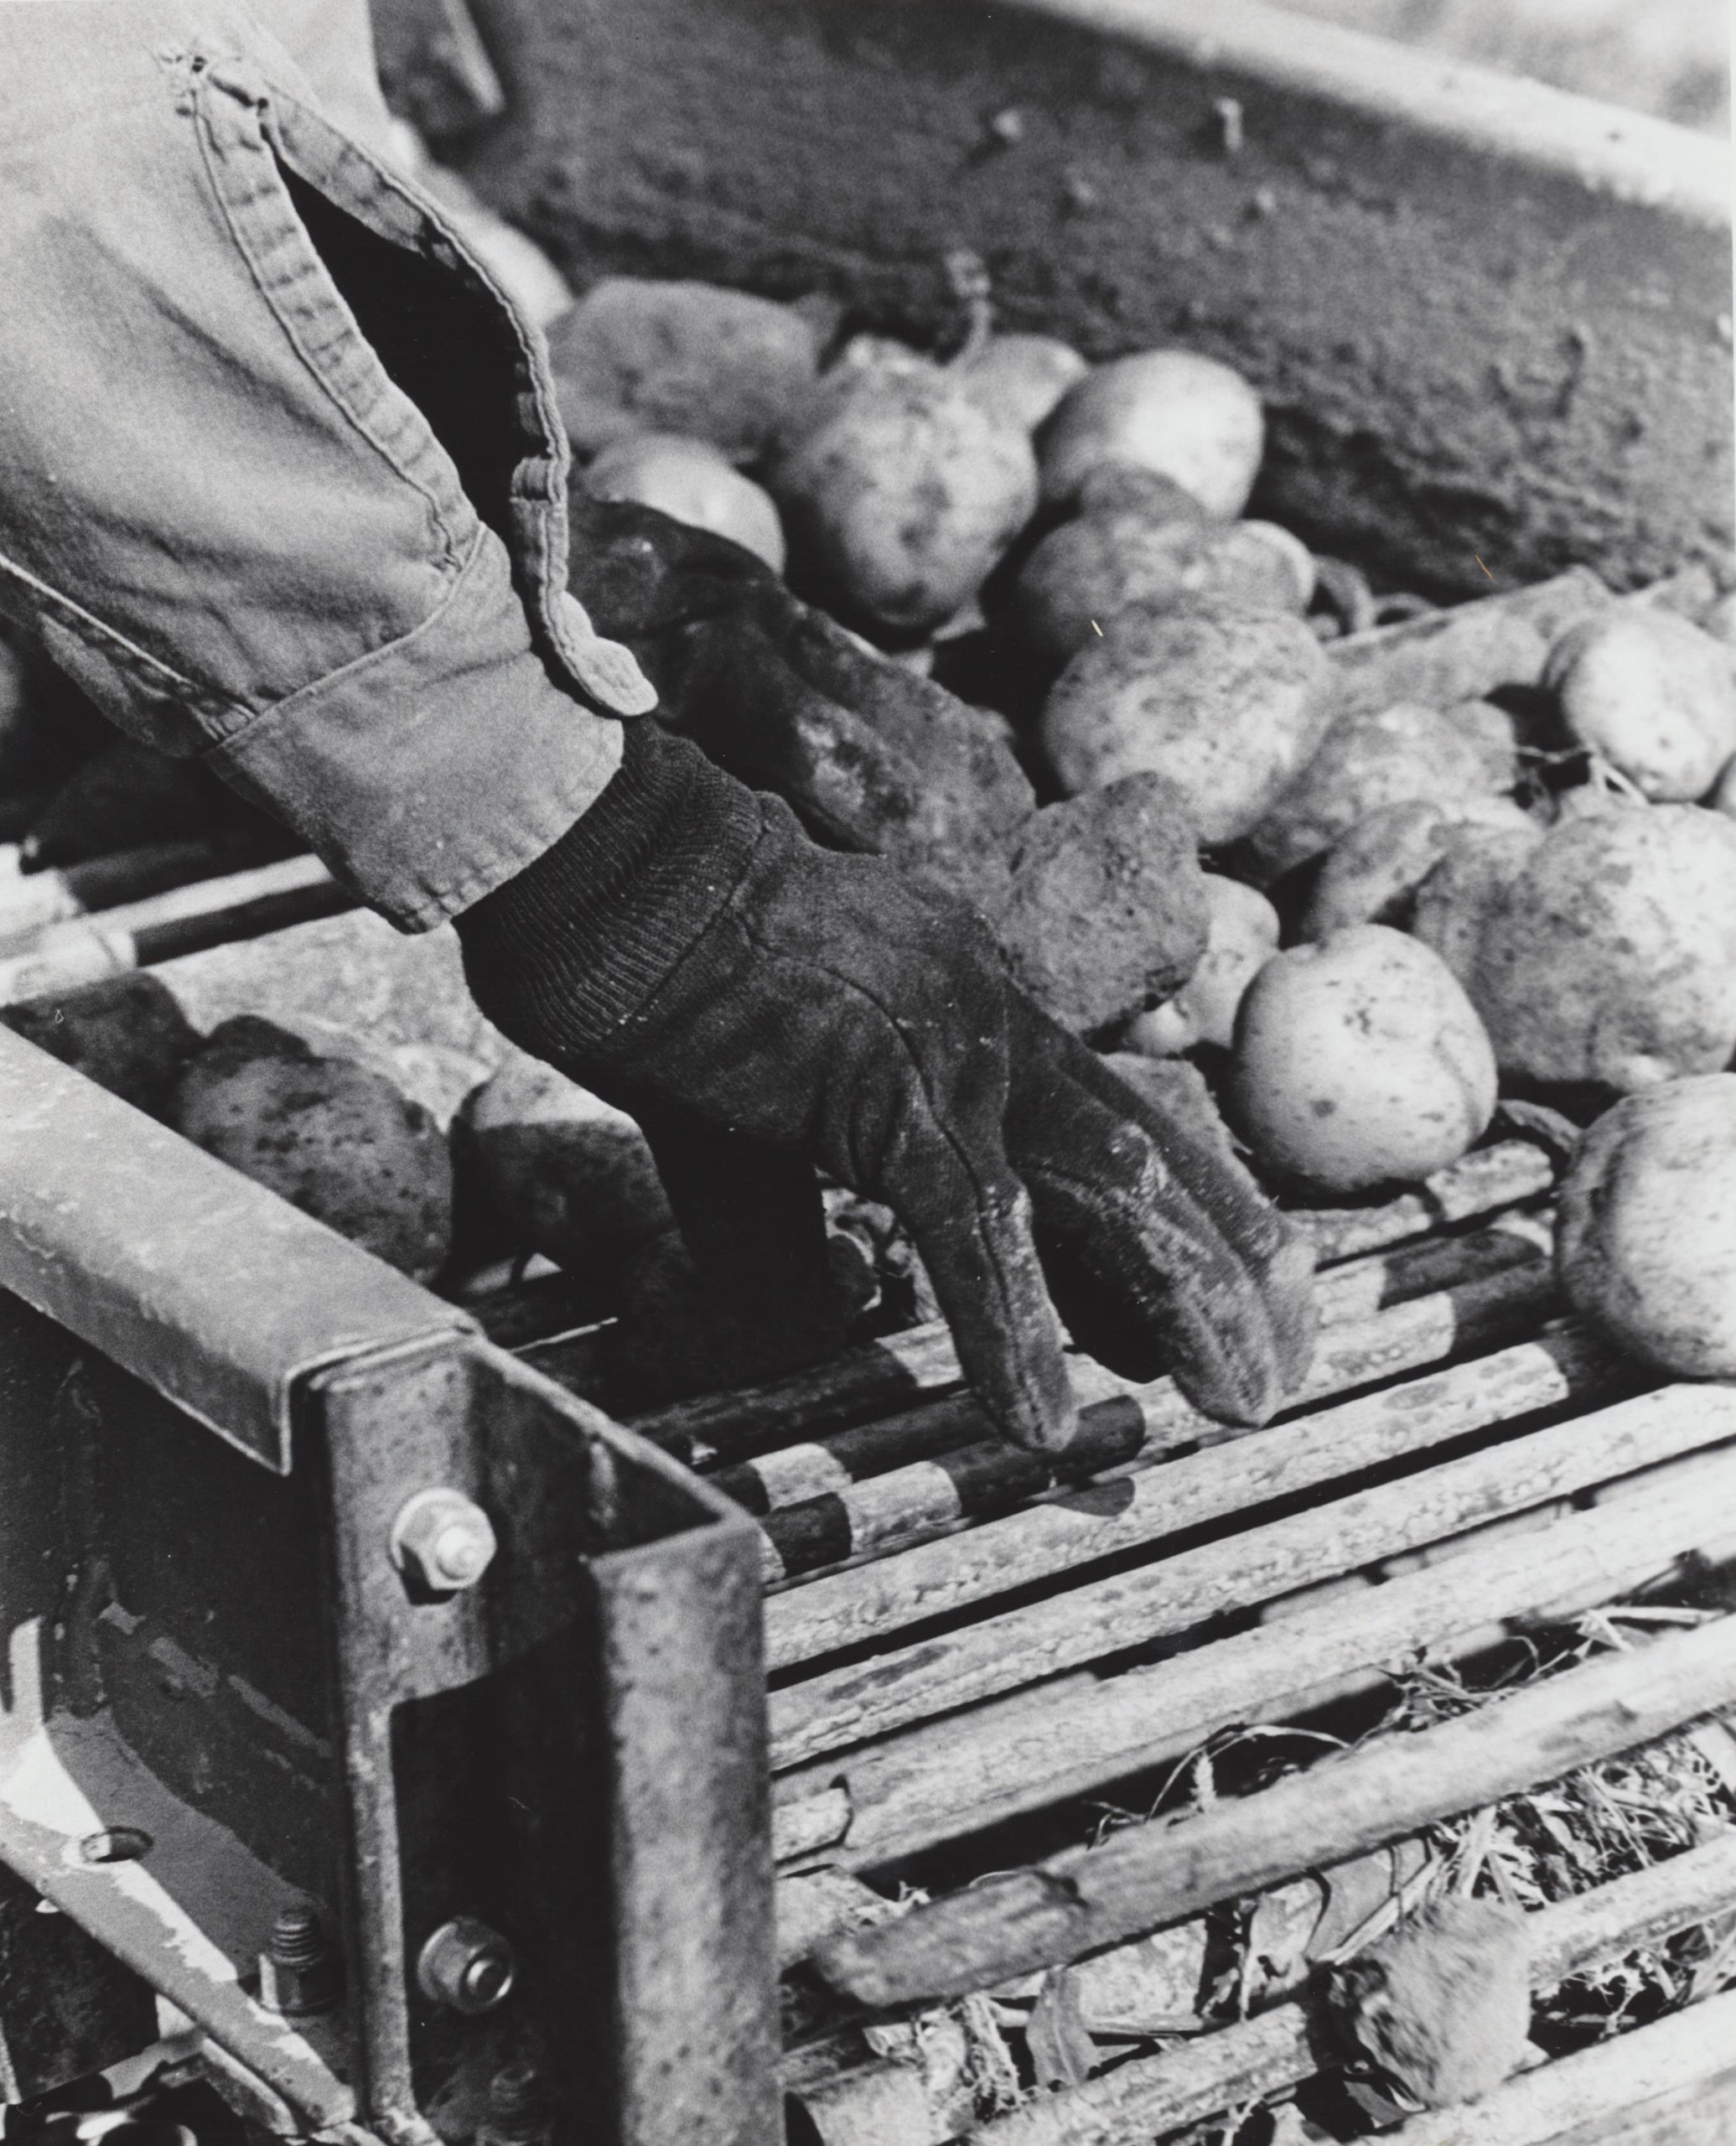 A worker on a South Fork potato farm.